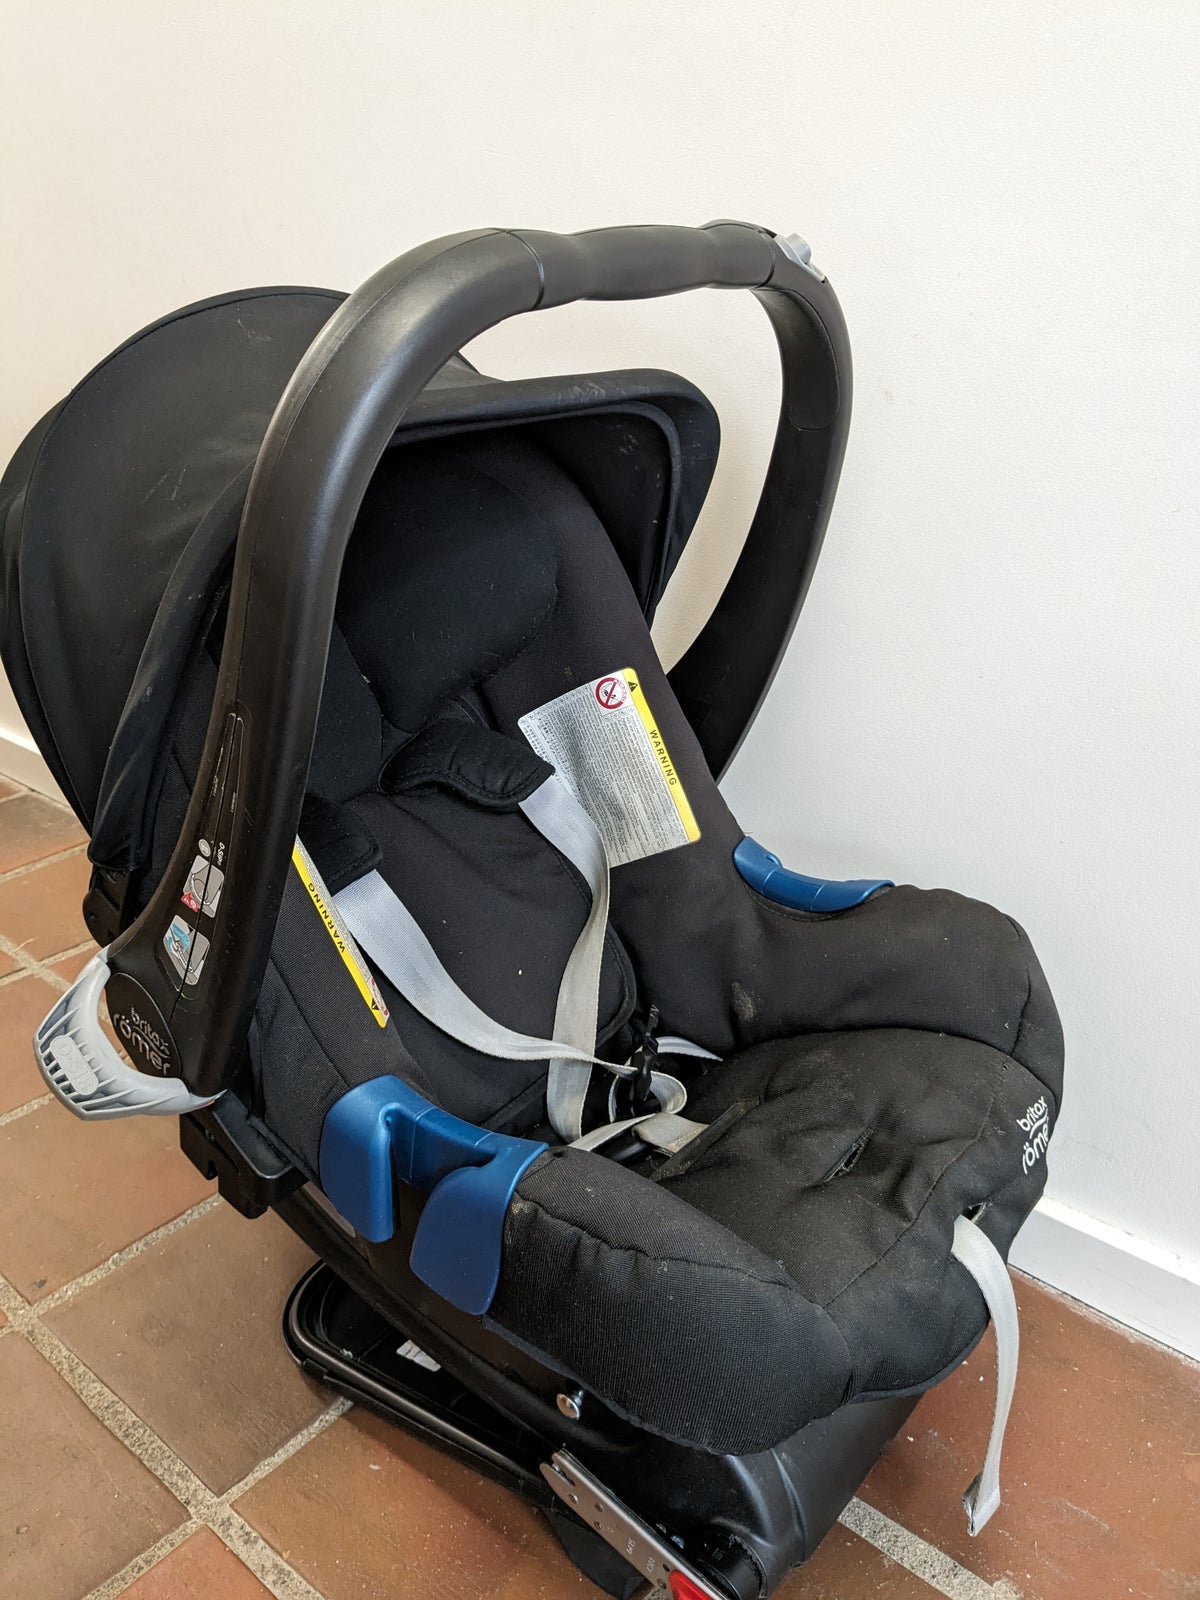 Babysæde, op til 13 kg , Britax Römer Baby-safe plus II-RM